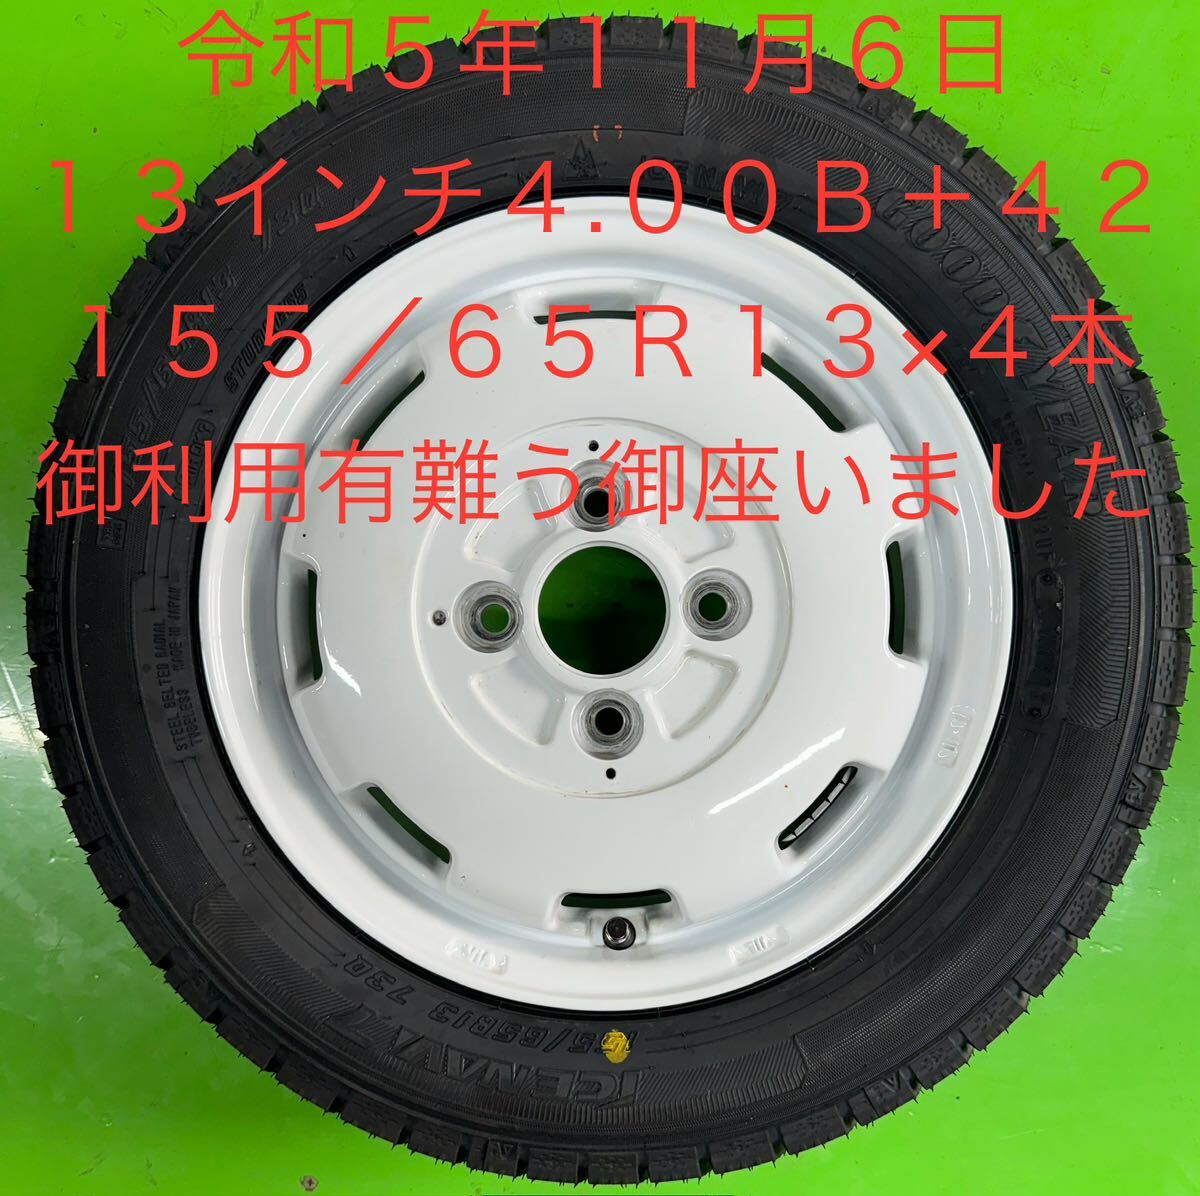  Hiroshima prefecture Fukuyama city Okayama prefecture . hill city tire exchange rearrangement 13 -inch 1 pcs Y550 wheel balance .OK